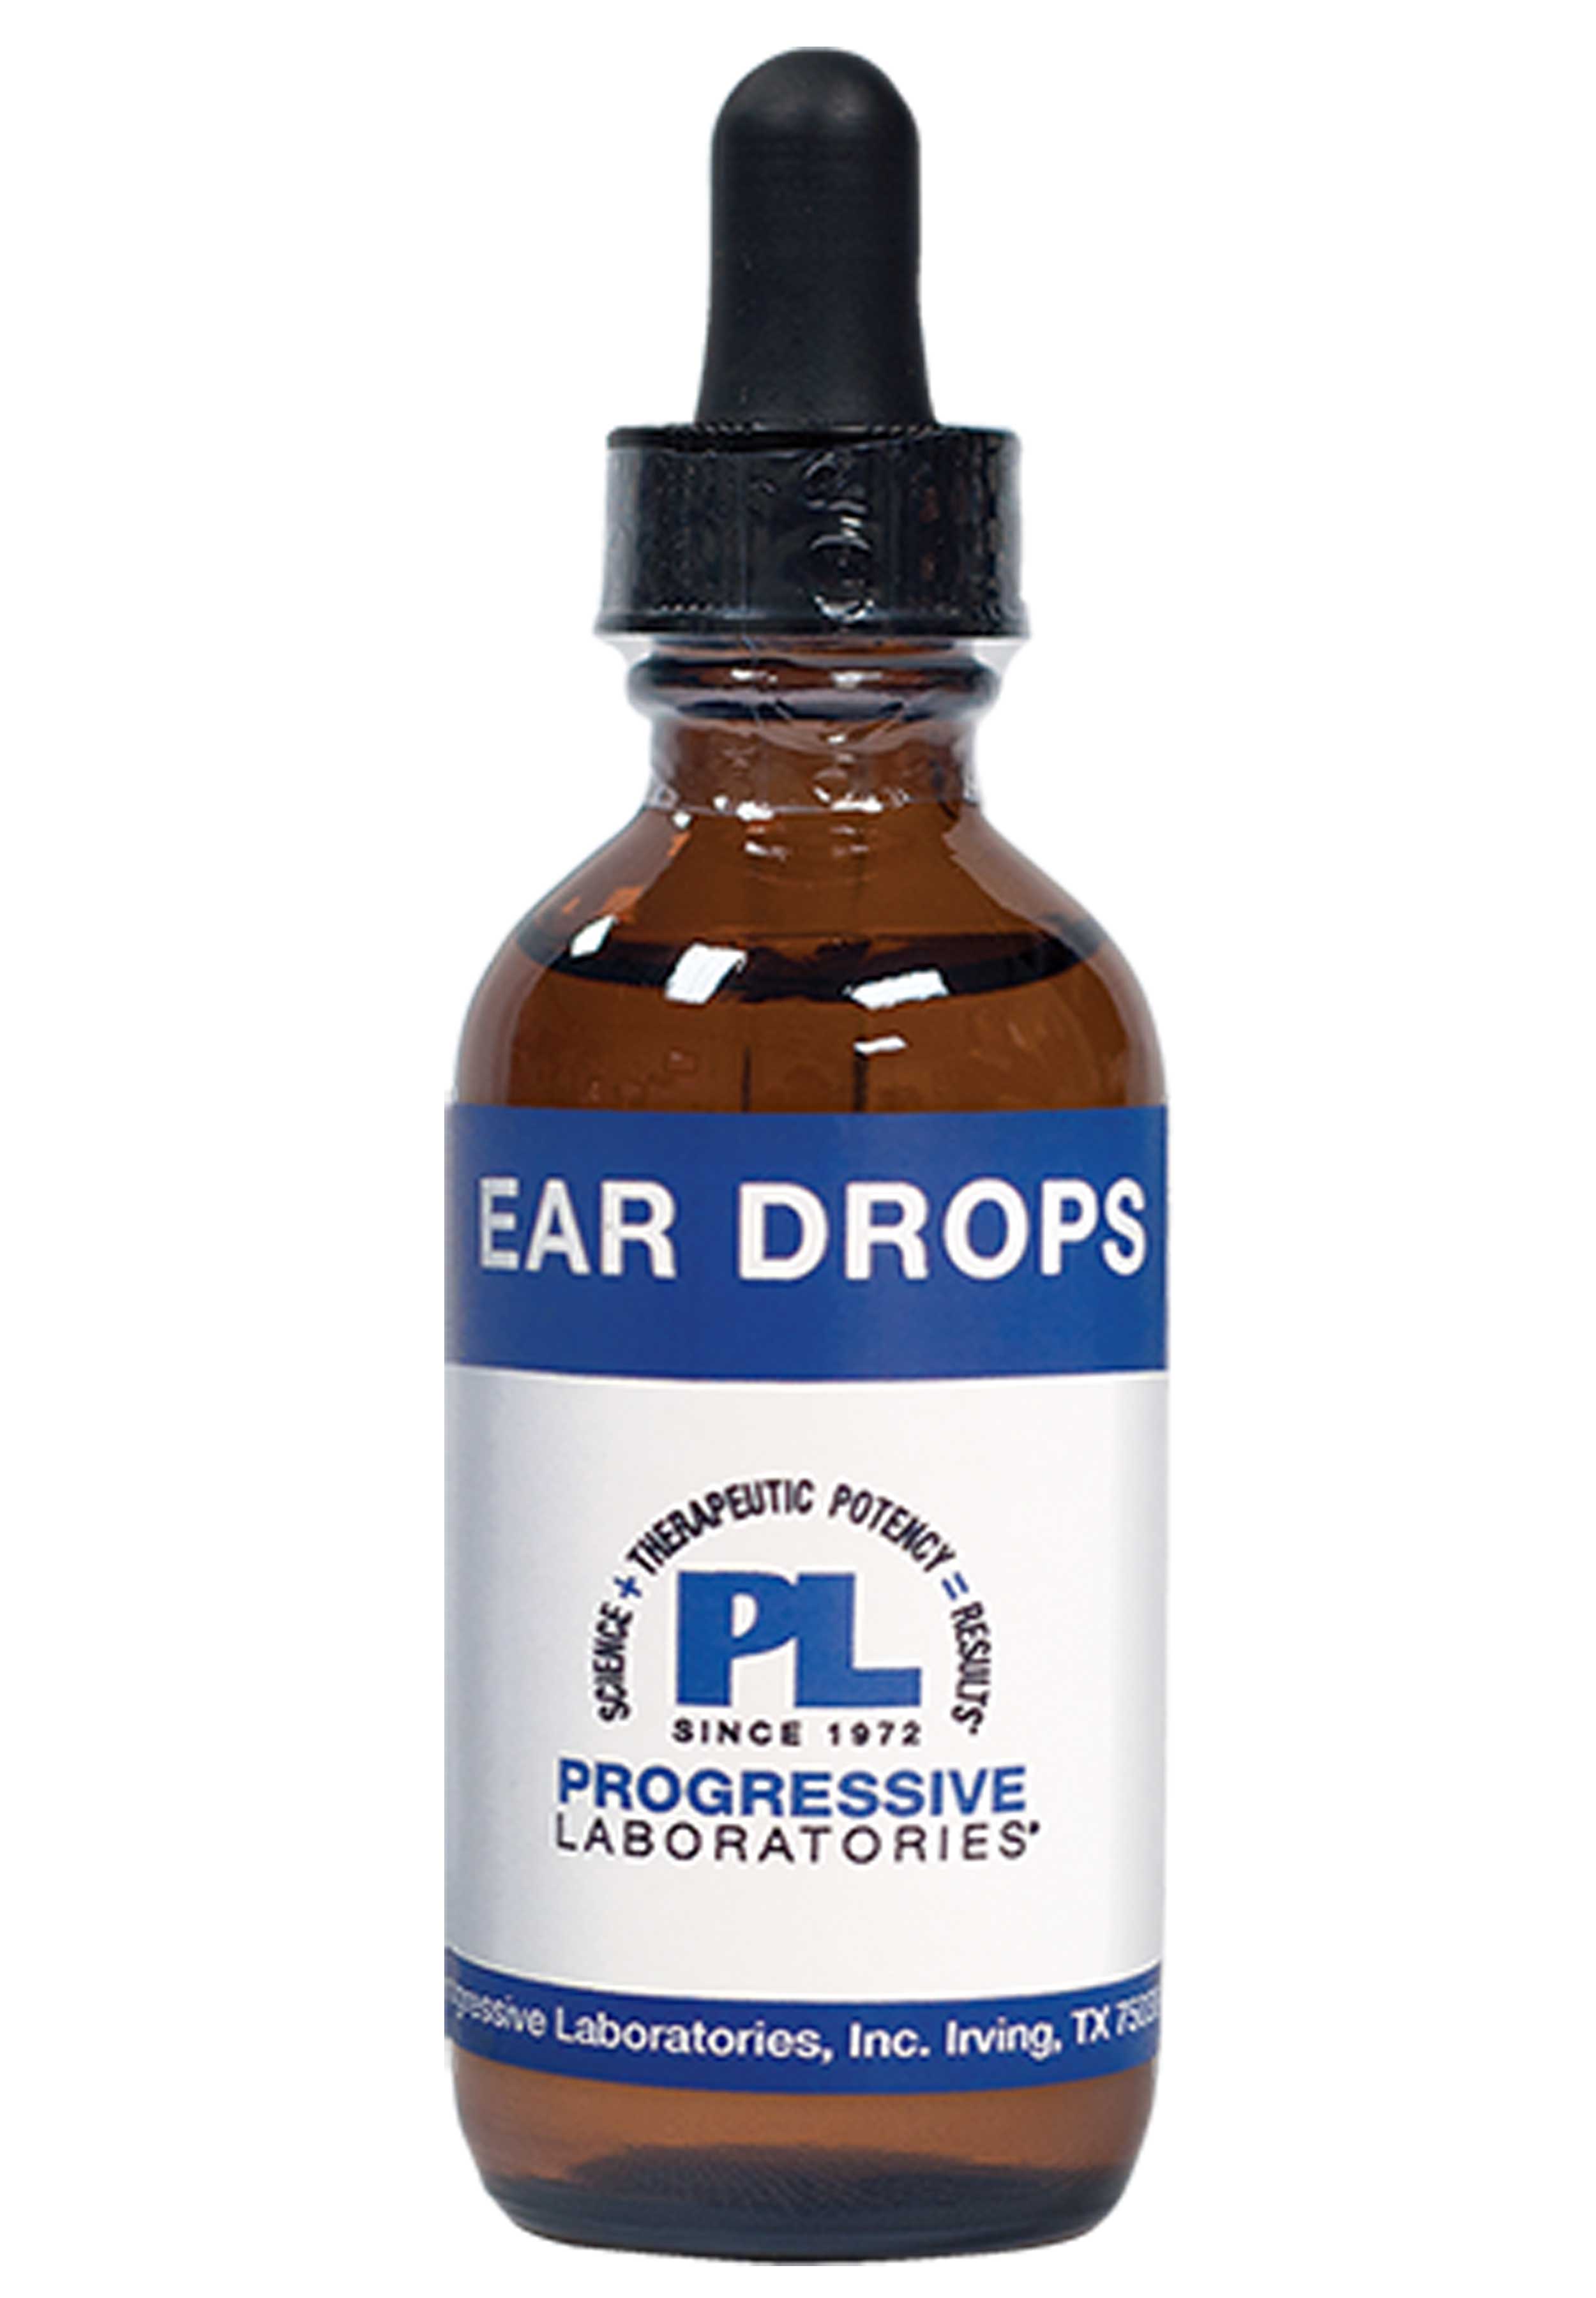 Progressive Laboratories Ear Drops